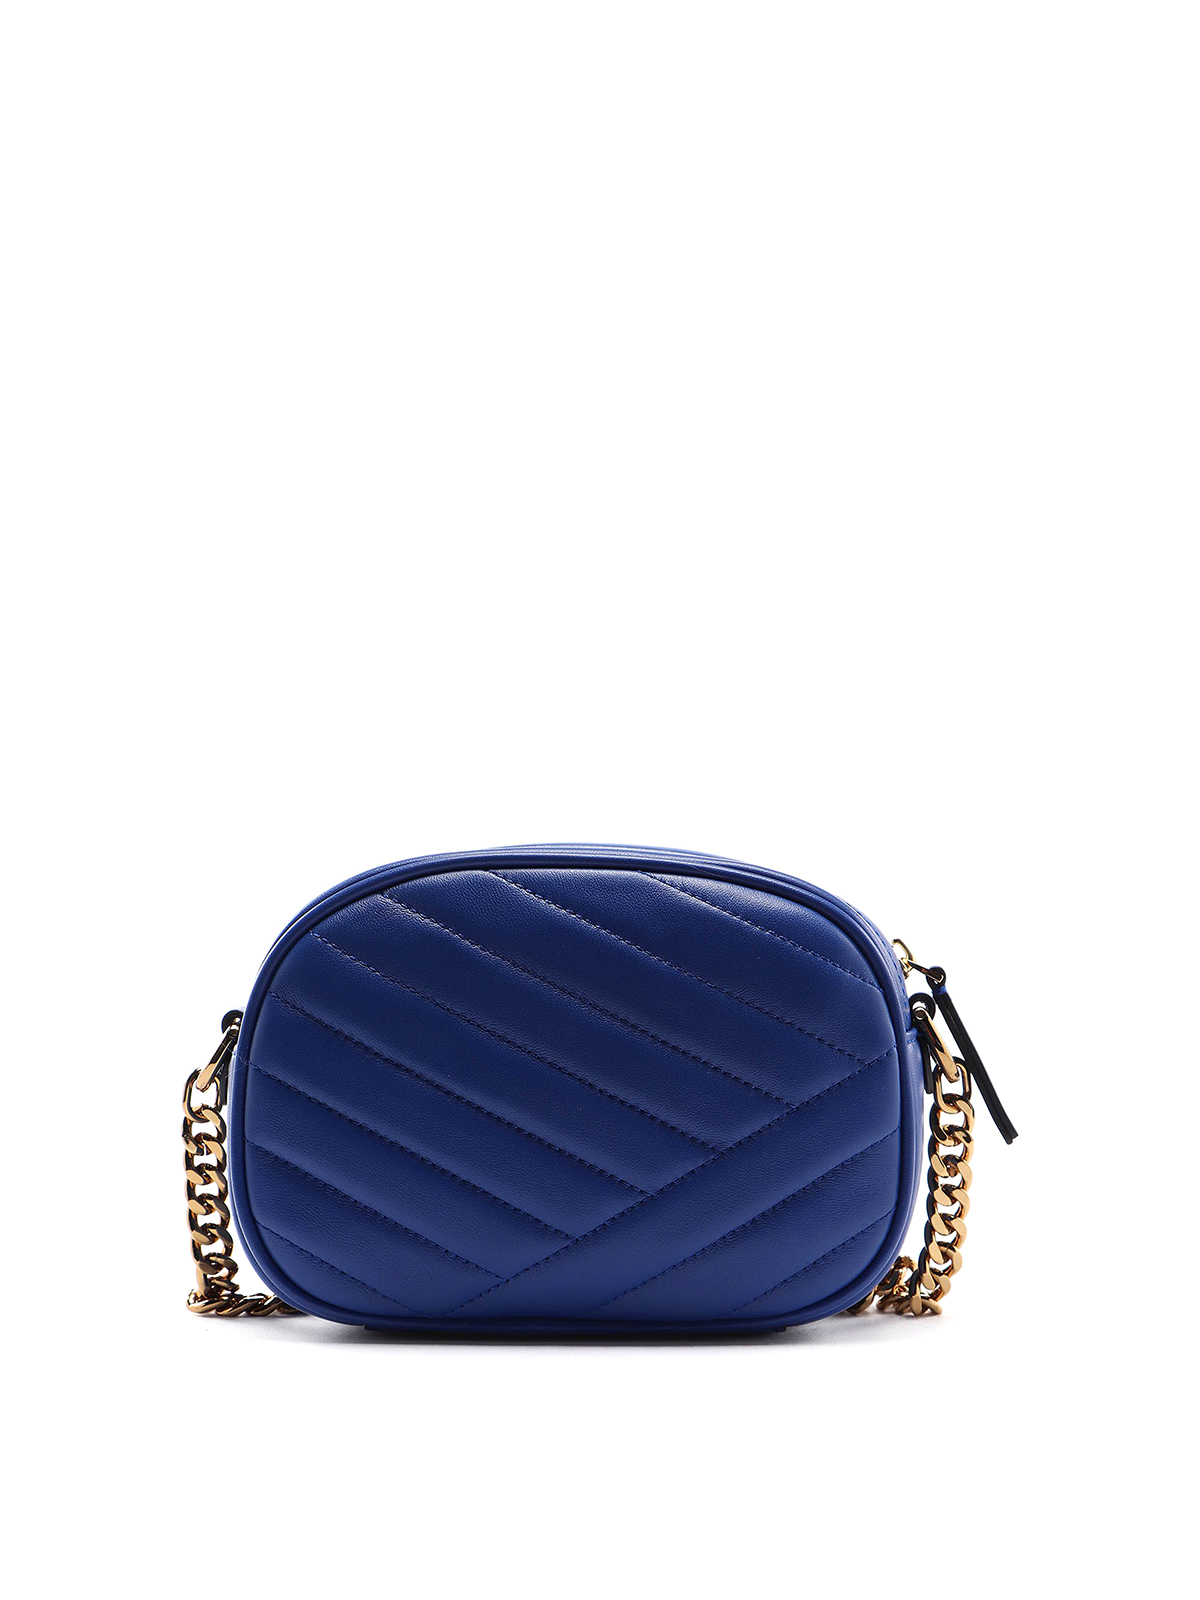 Small Kira Chevron Bag - Tory Burch - Blue - Leather